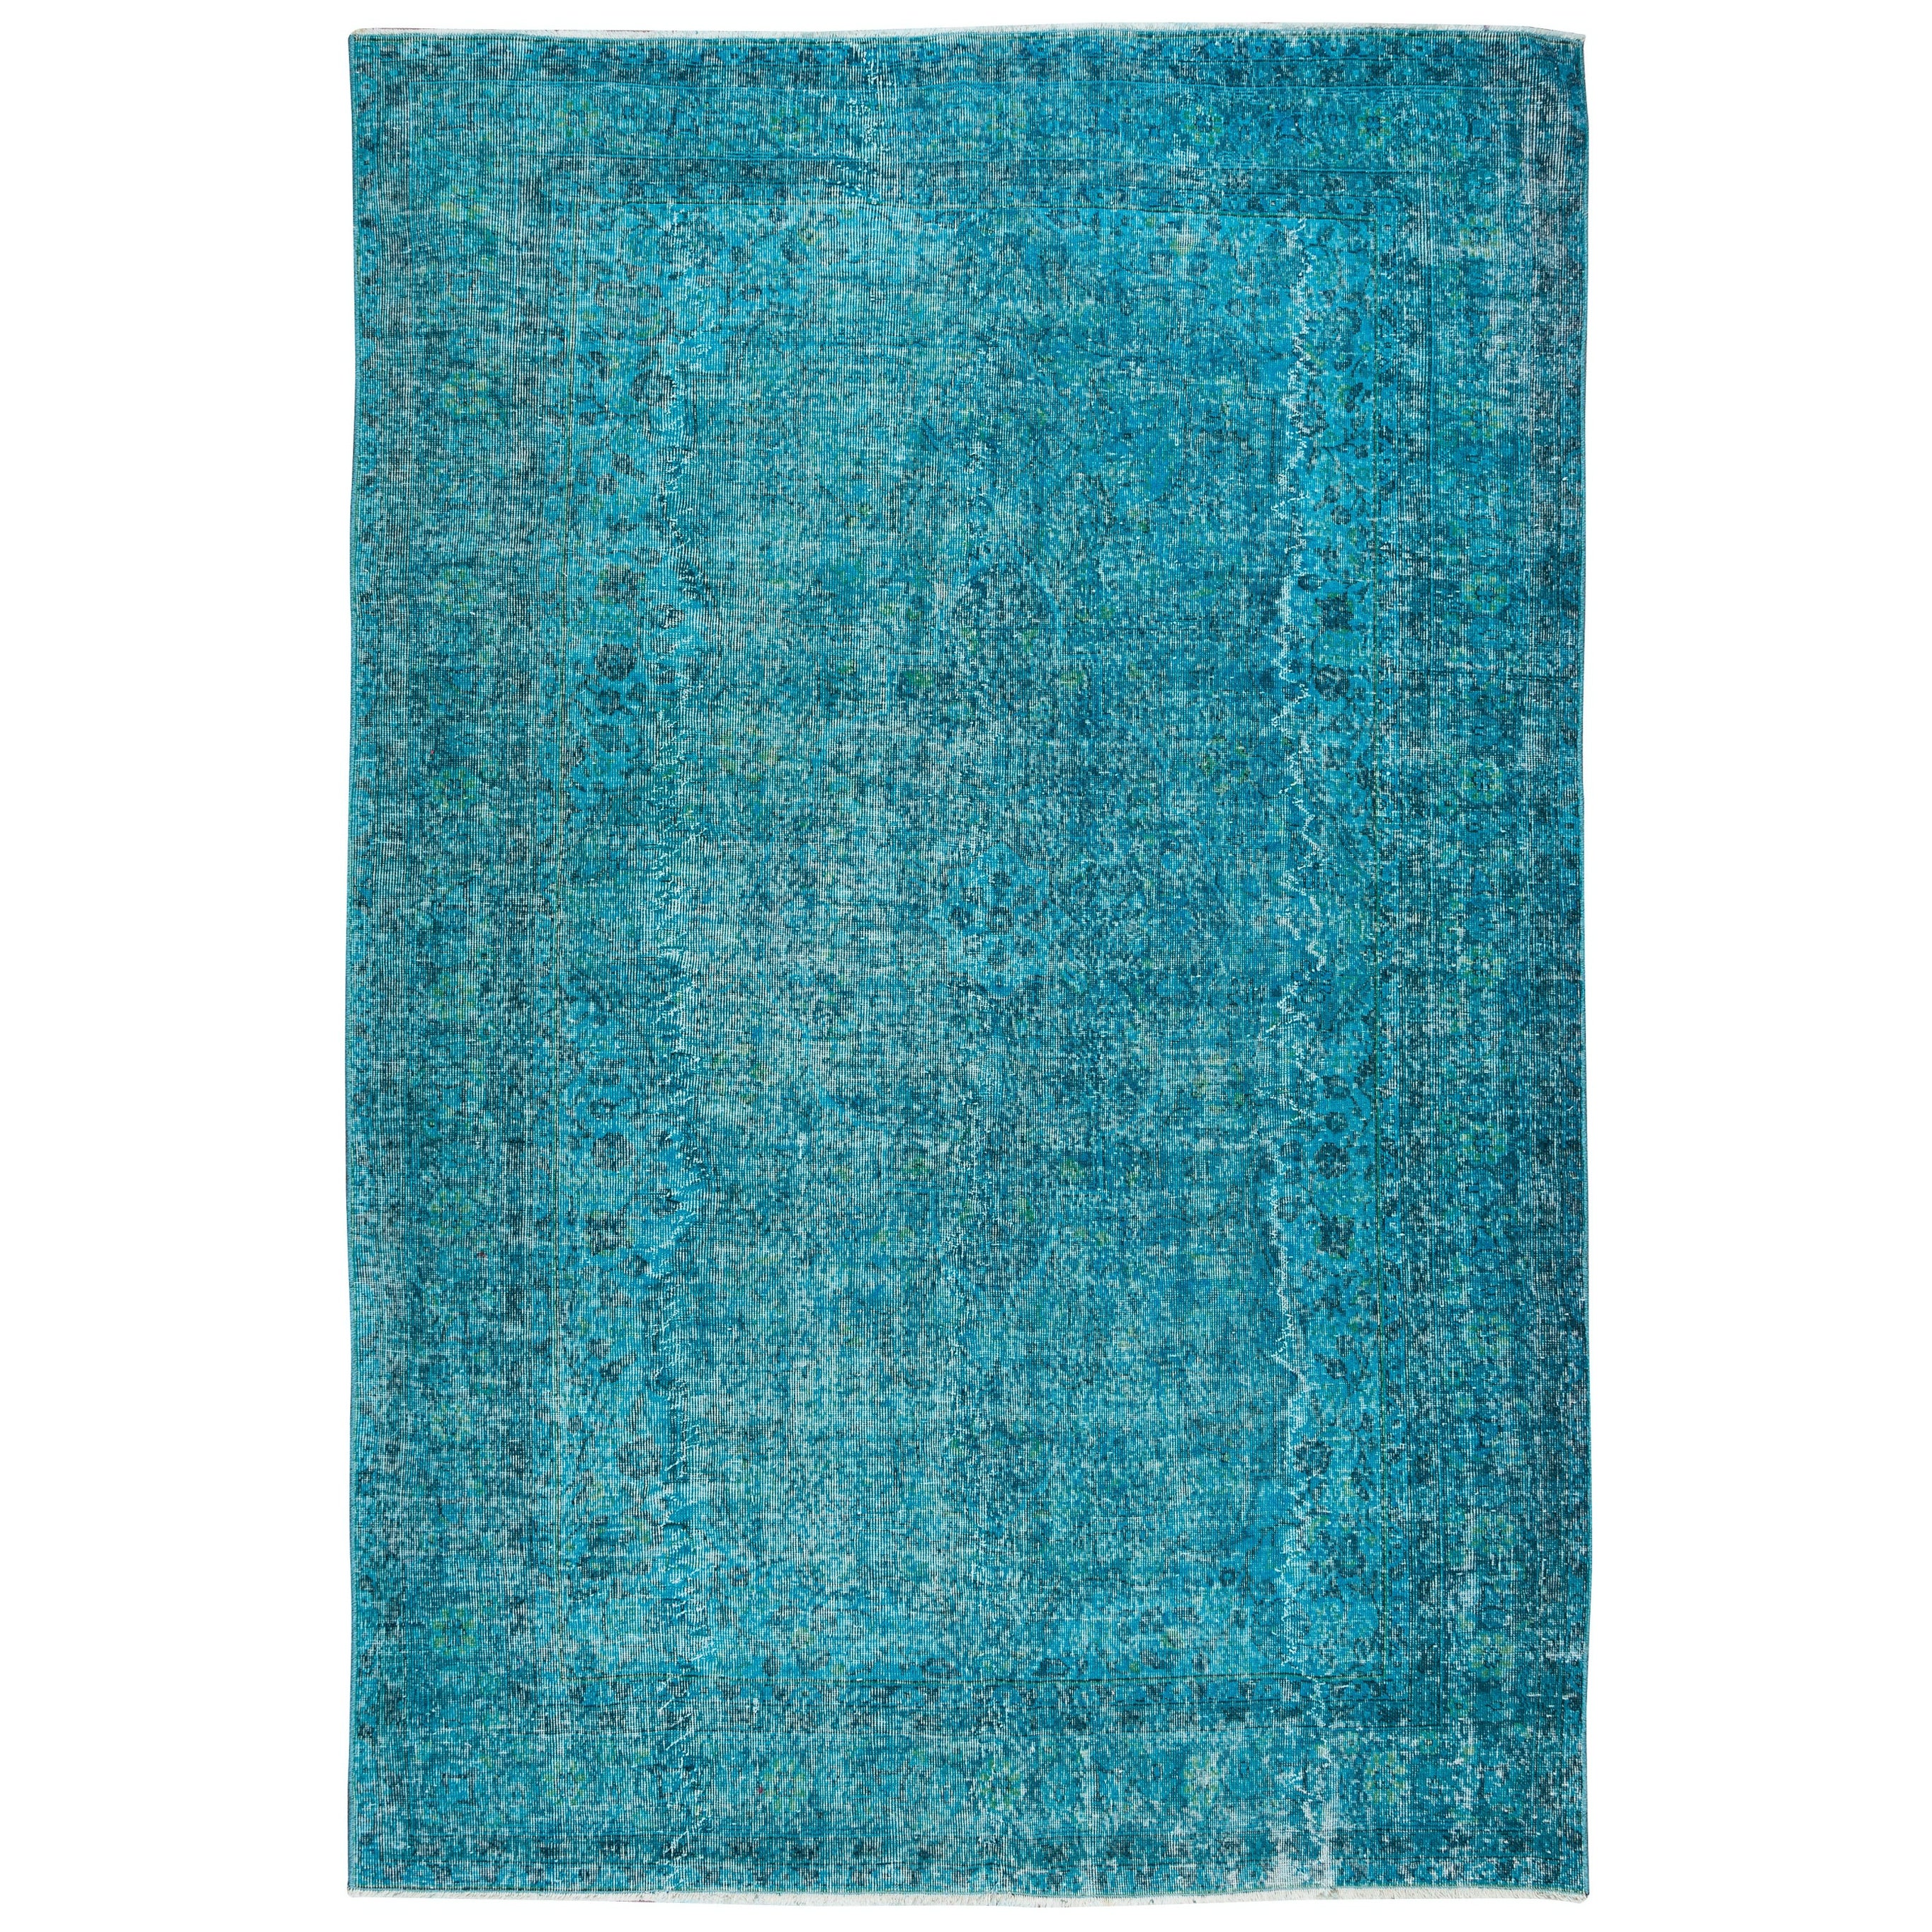 6.7x10 Ft Handmade Vintage Anatolian Carpet, Teal Blue Rug for Modern Interiors For Sale